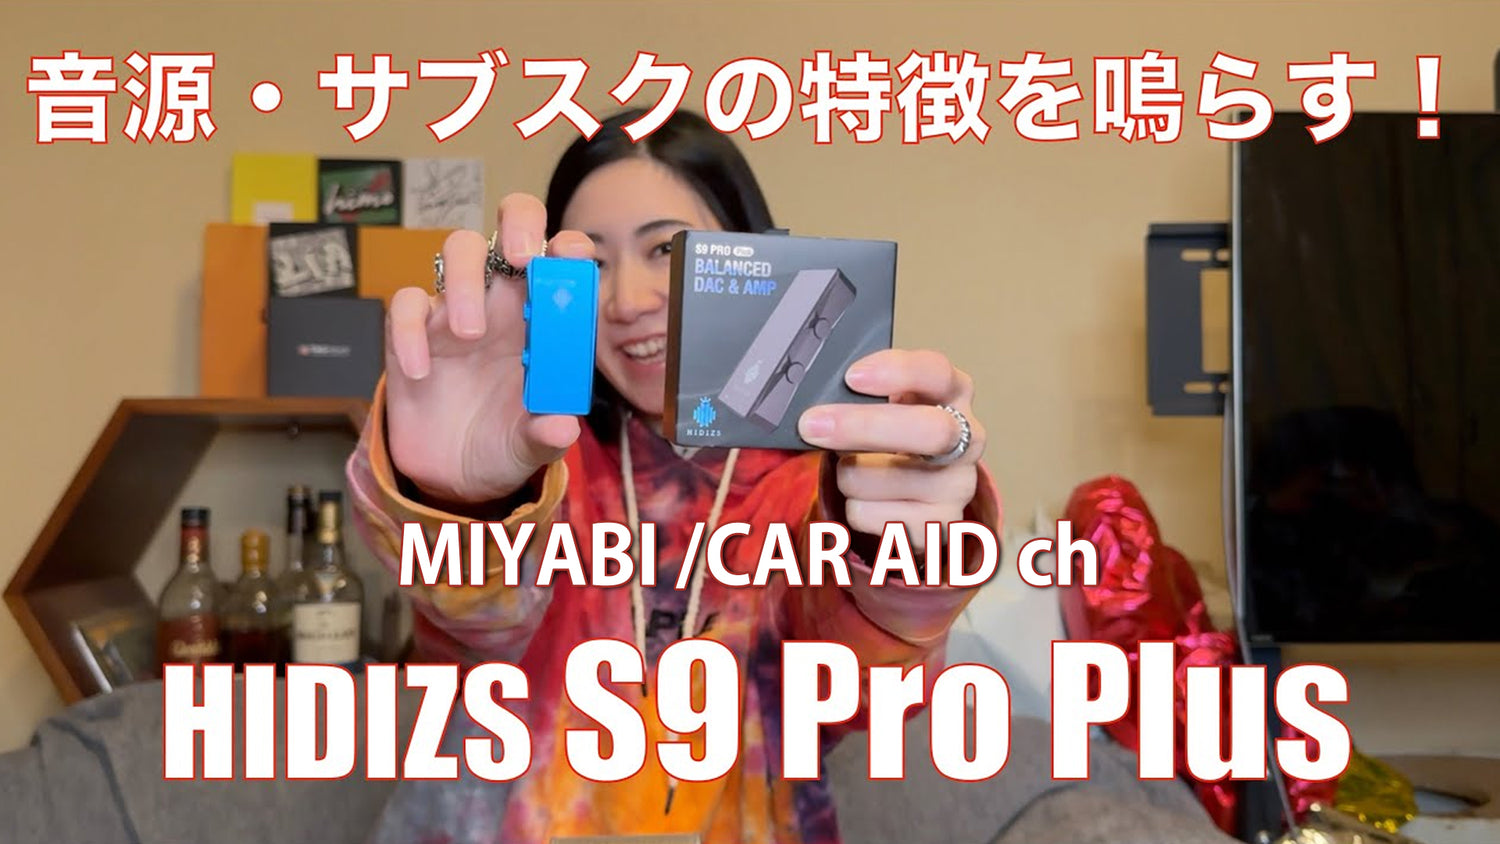 Hidizs S9 Pro Plus Martha Review - MIYABI